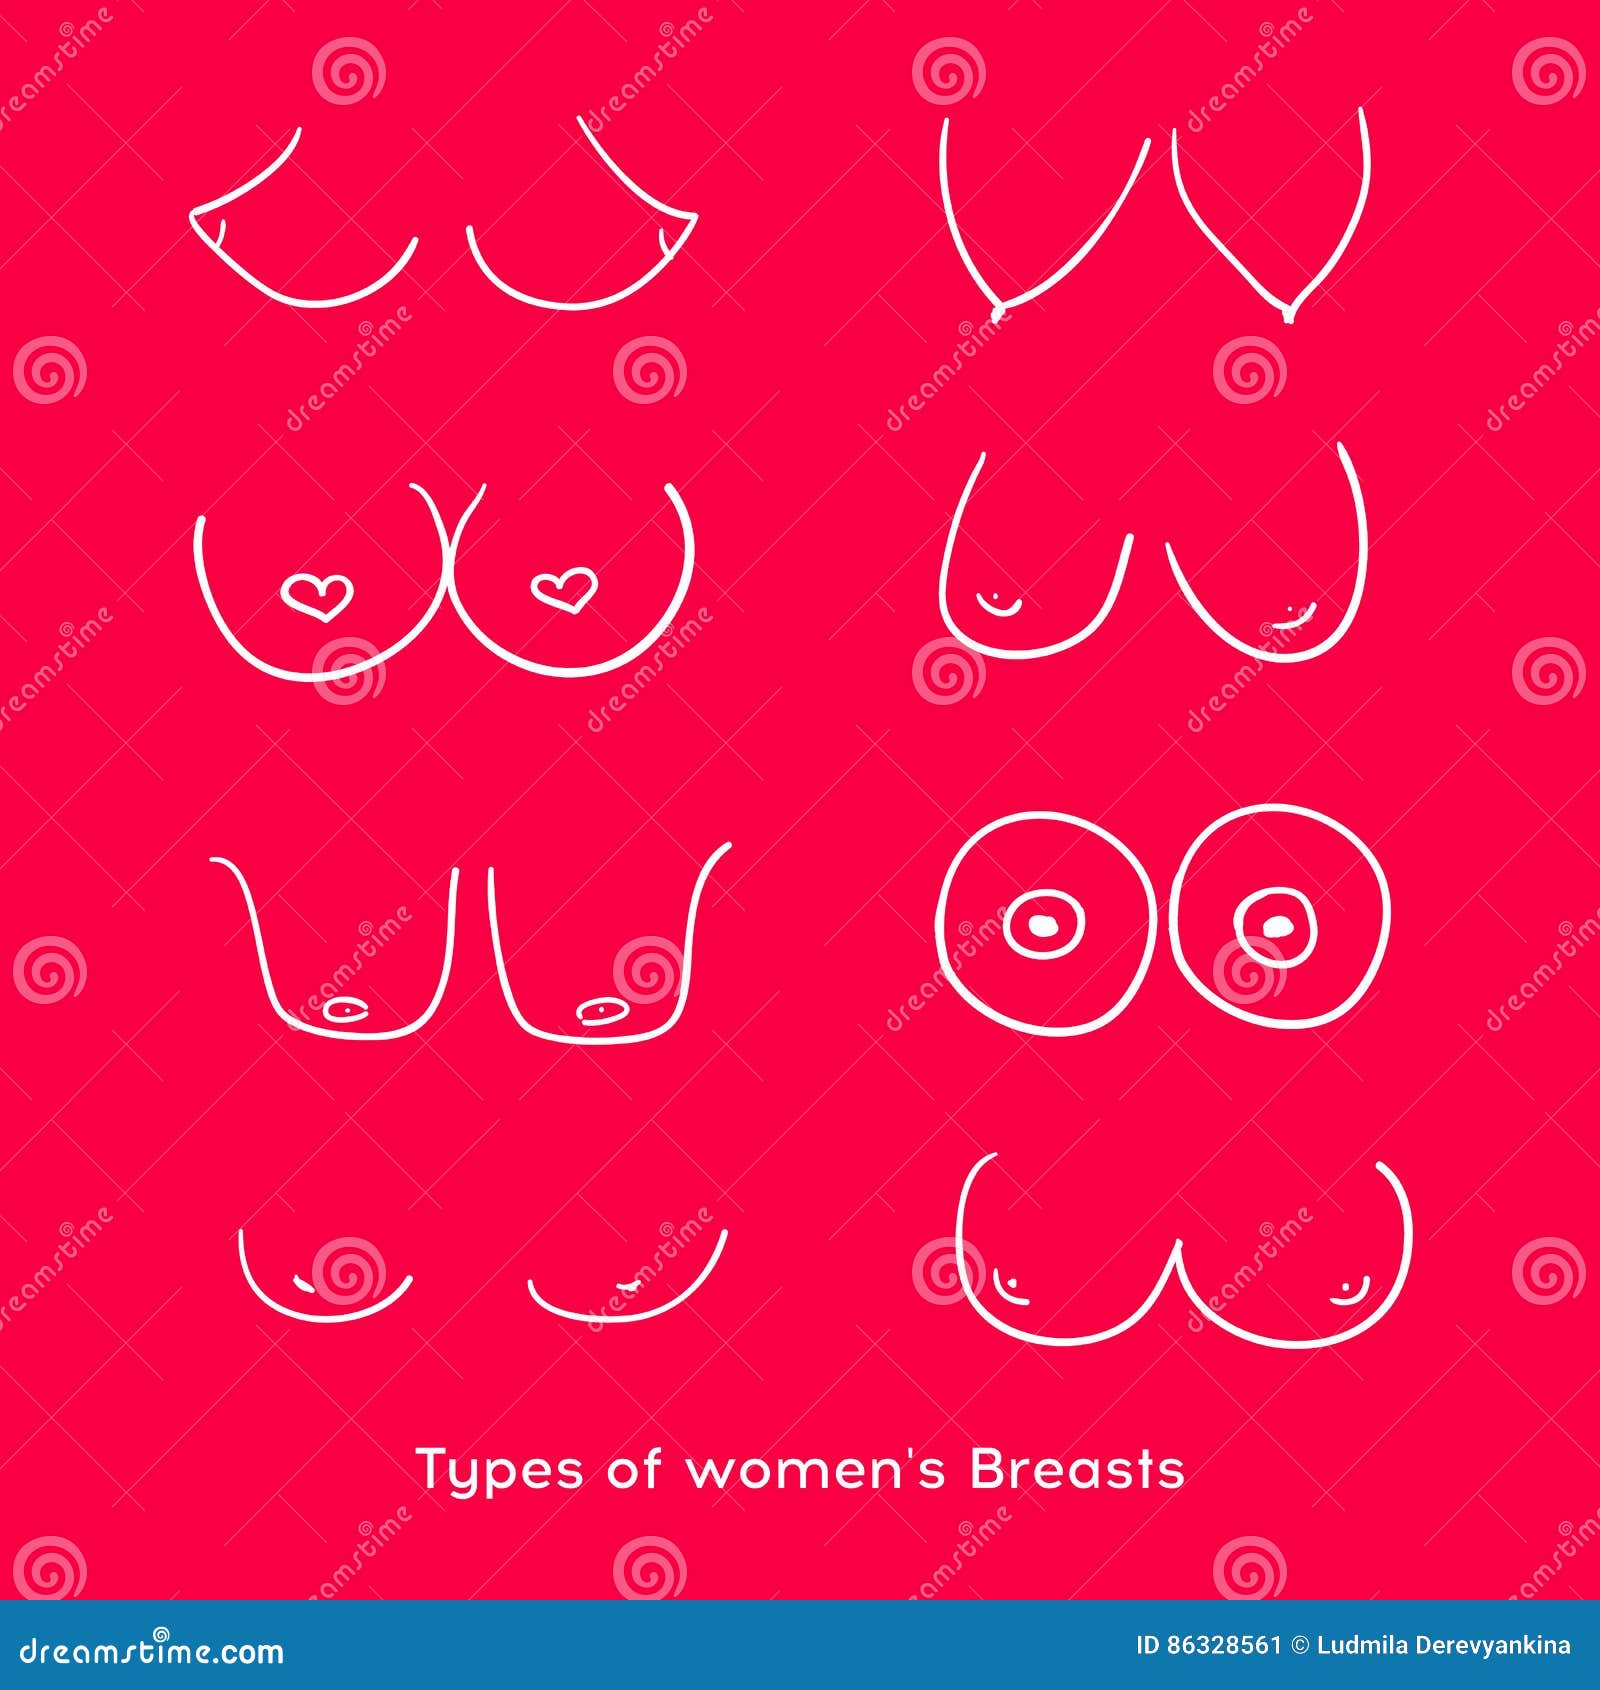 https://thumbs.dreamstime.com/z/types-women-s-breasts-women-s-breast-icon-breast-icon-vector-illustration-86328561.jpg